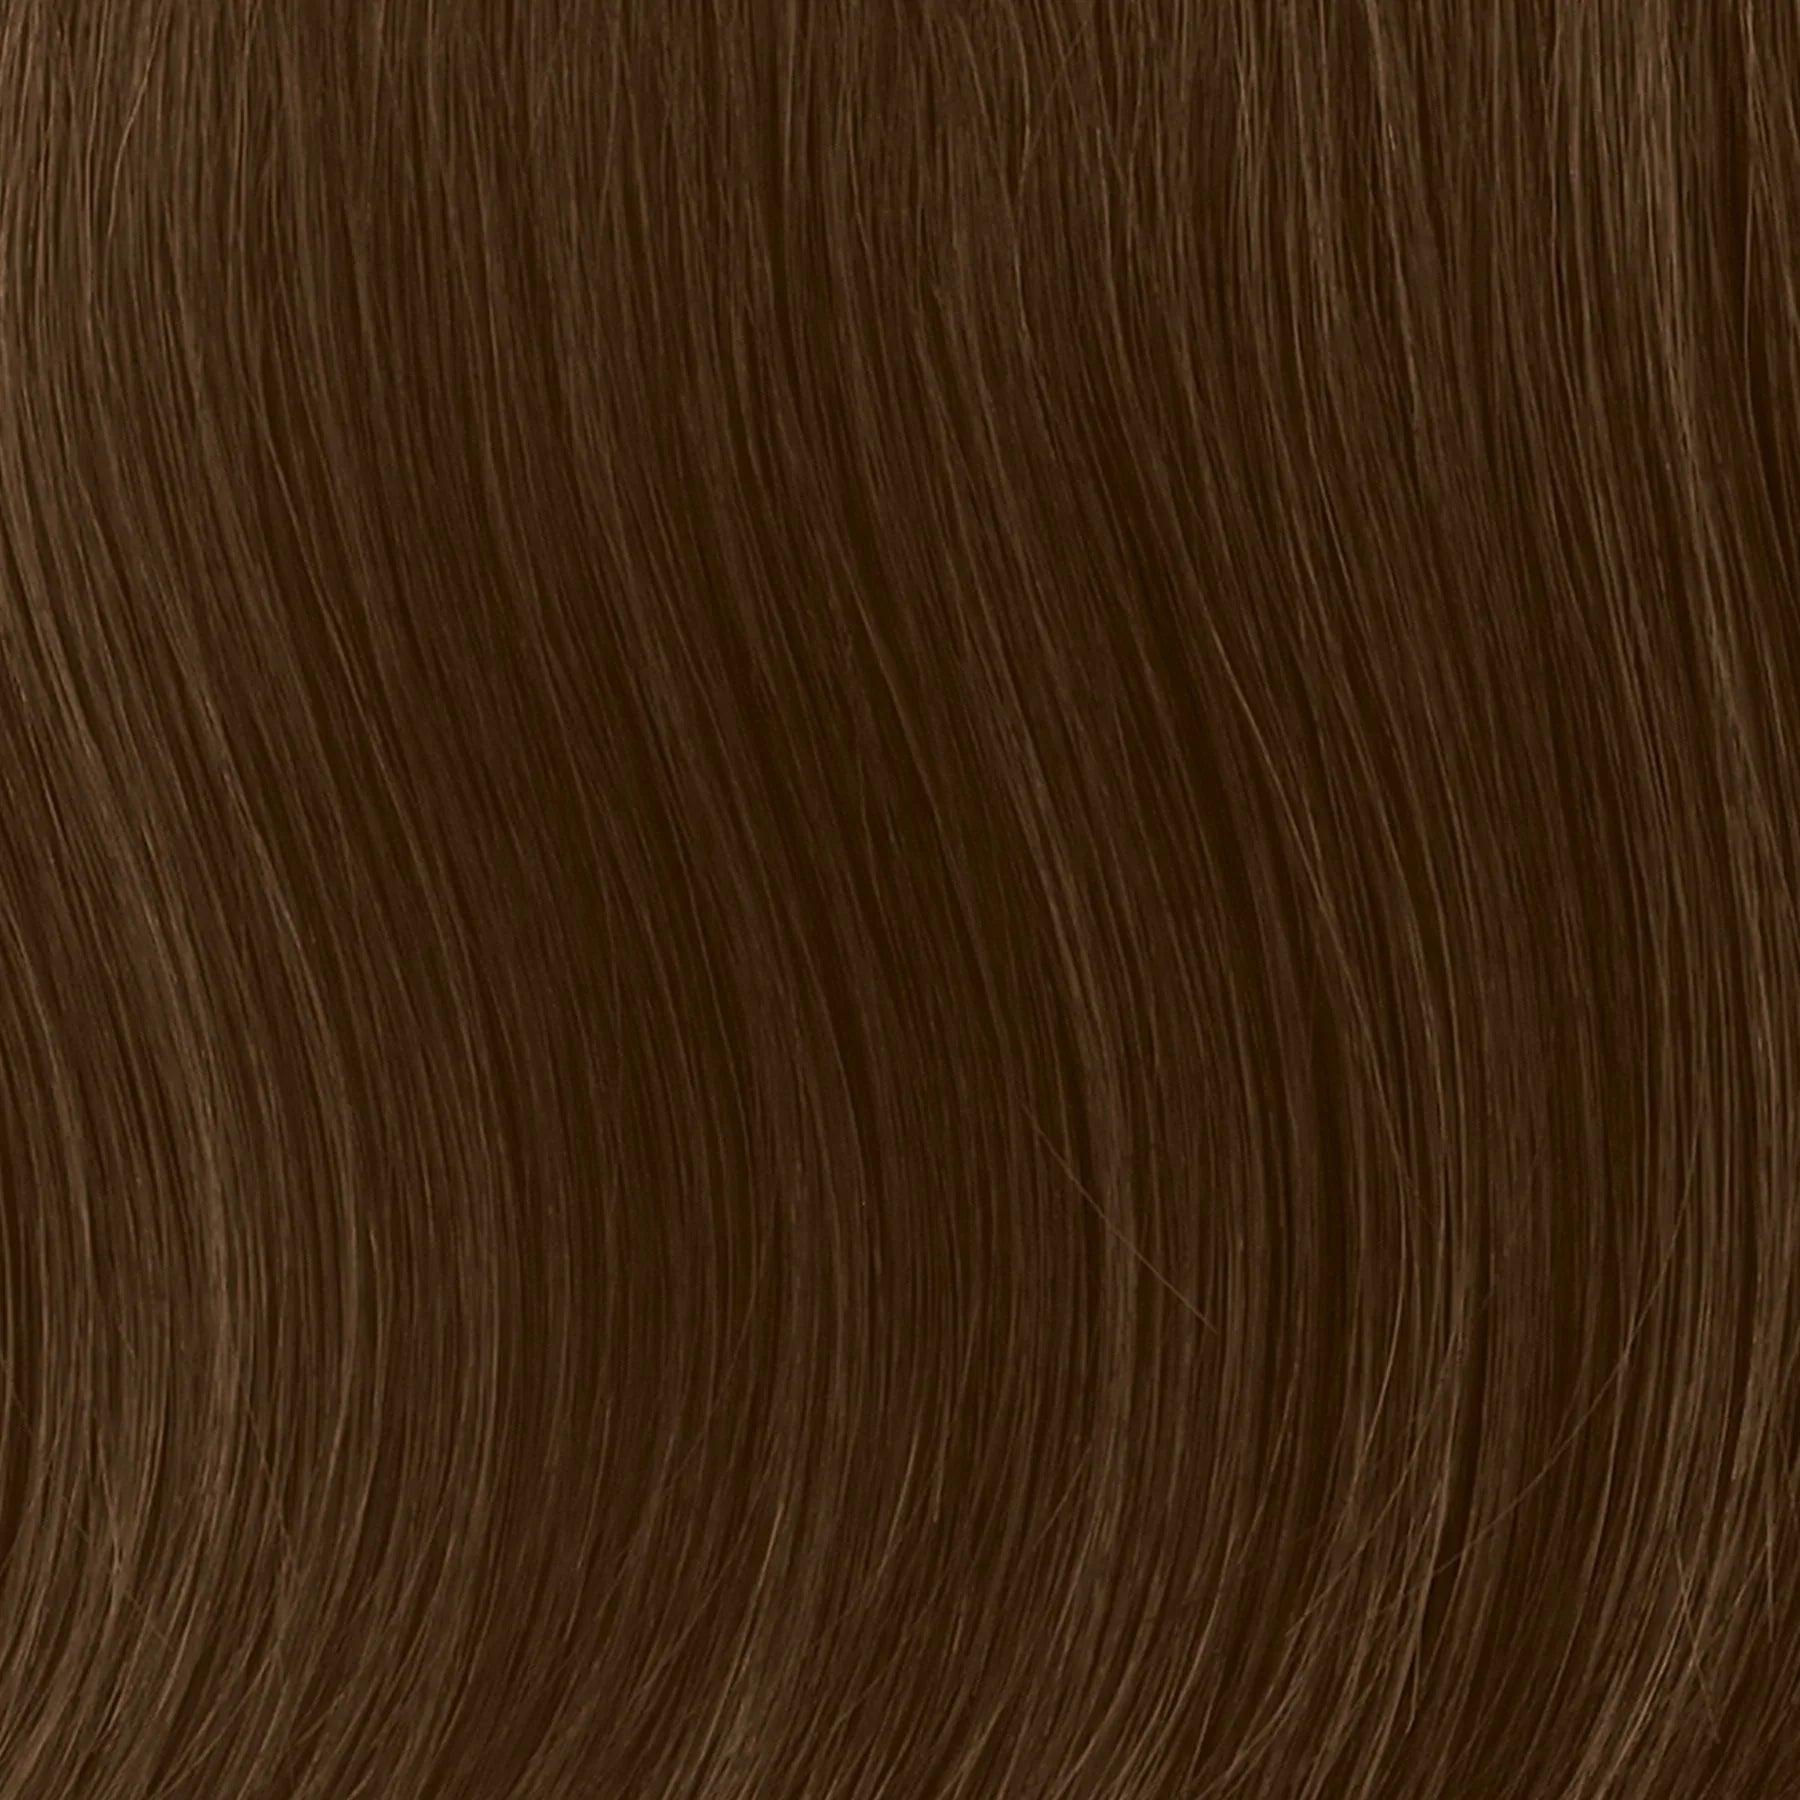 Trendy Average Wig by Toni Brattin | Heat Friendly Synthetic Wig (Basic Cap)